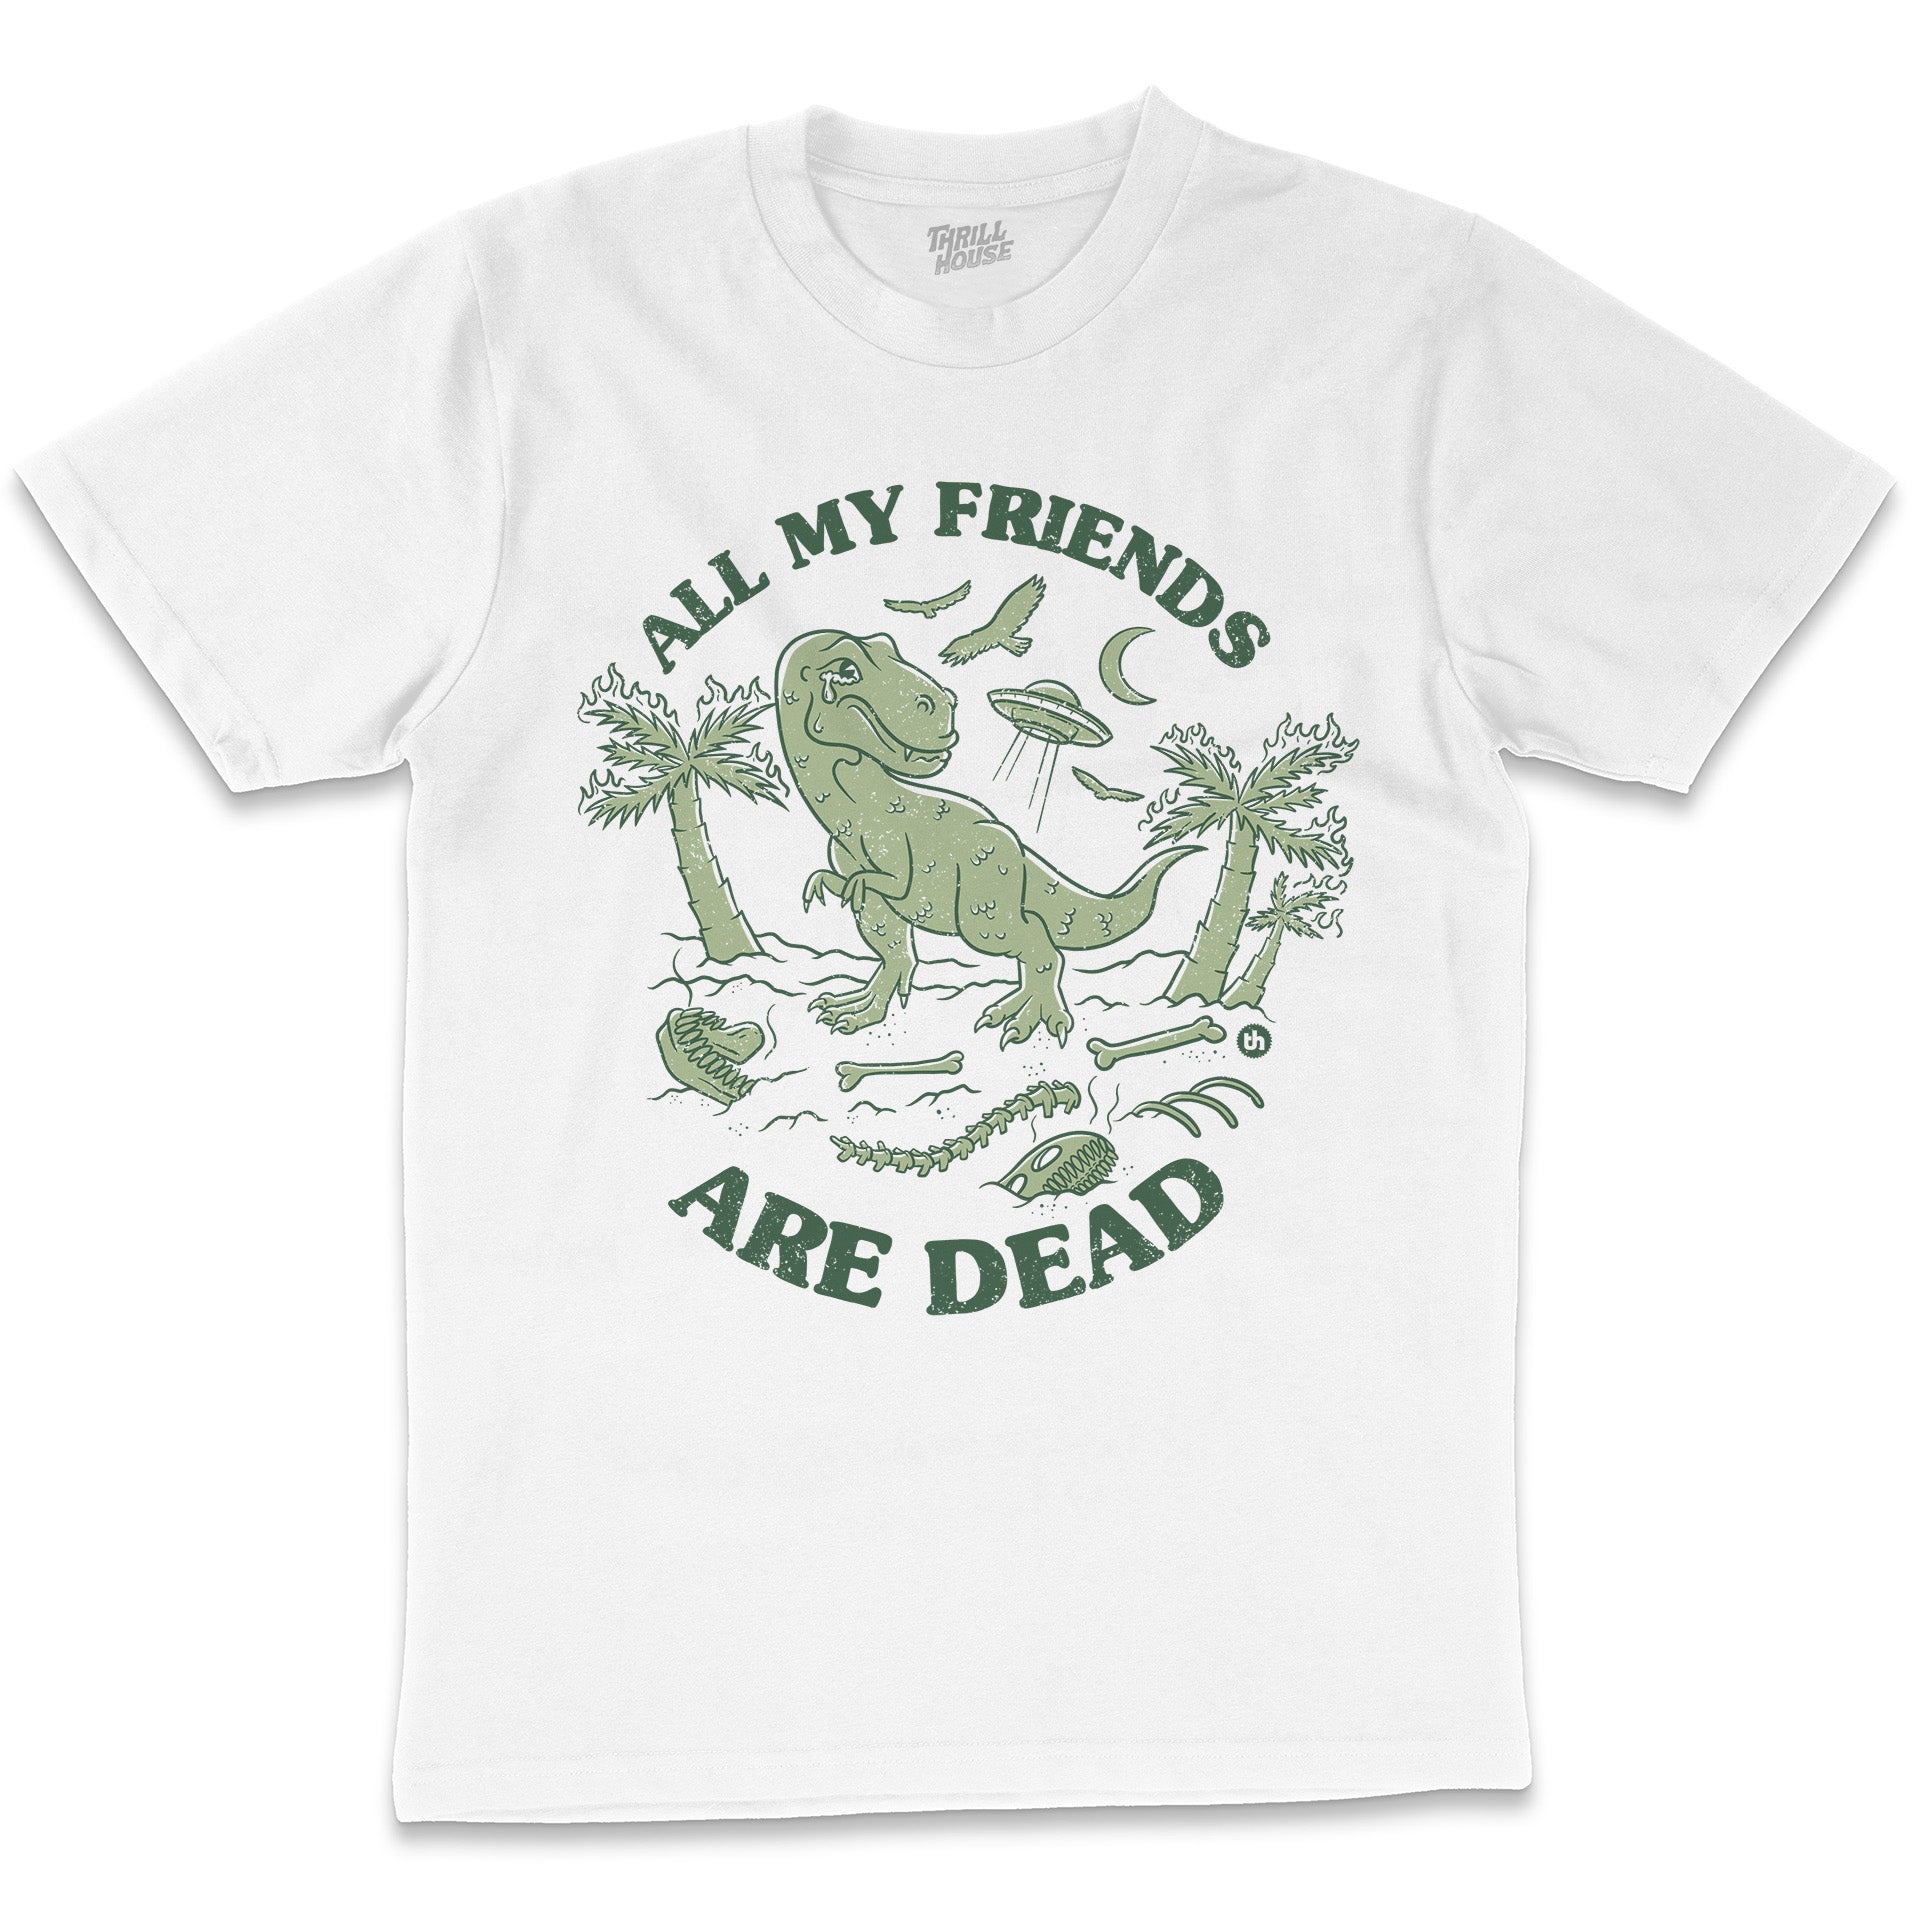 All My Friends are Dead Cool Dinosaur Jurassic Era Prehistoric Comet Earth Funny Slogan Cotton T-Shirt